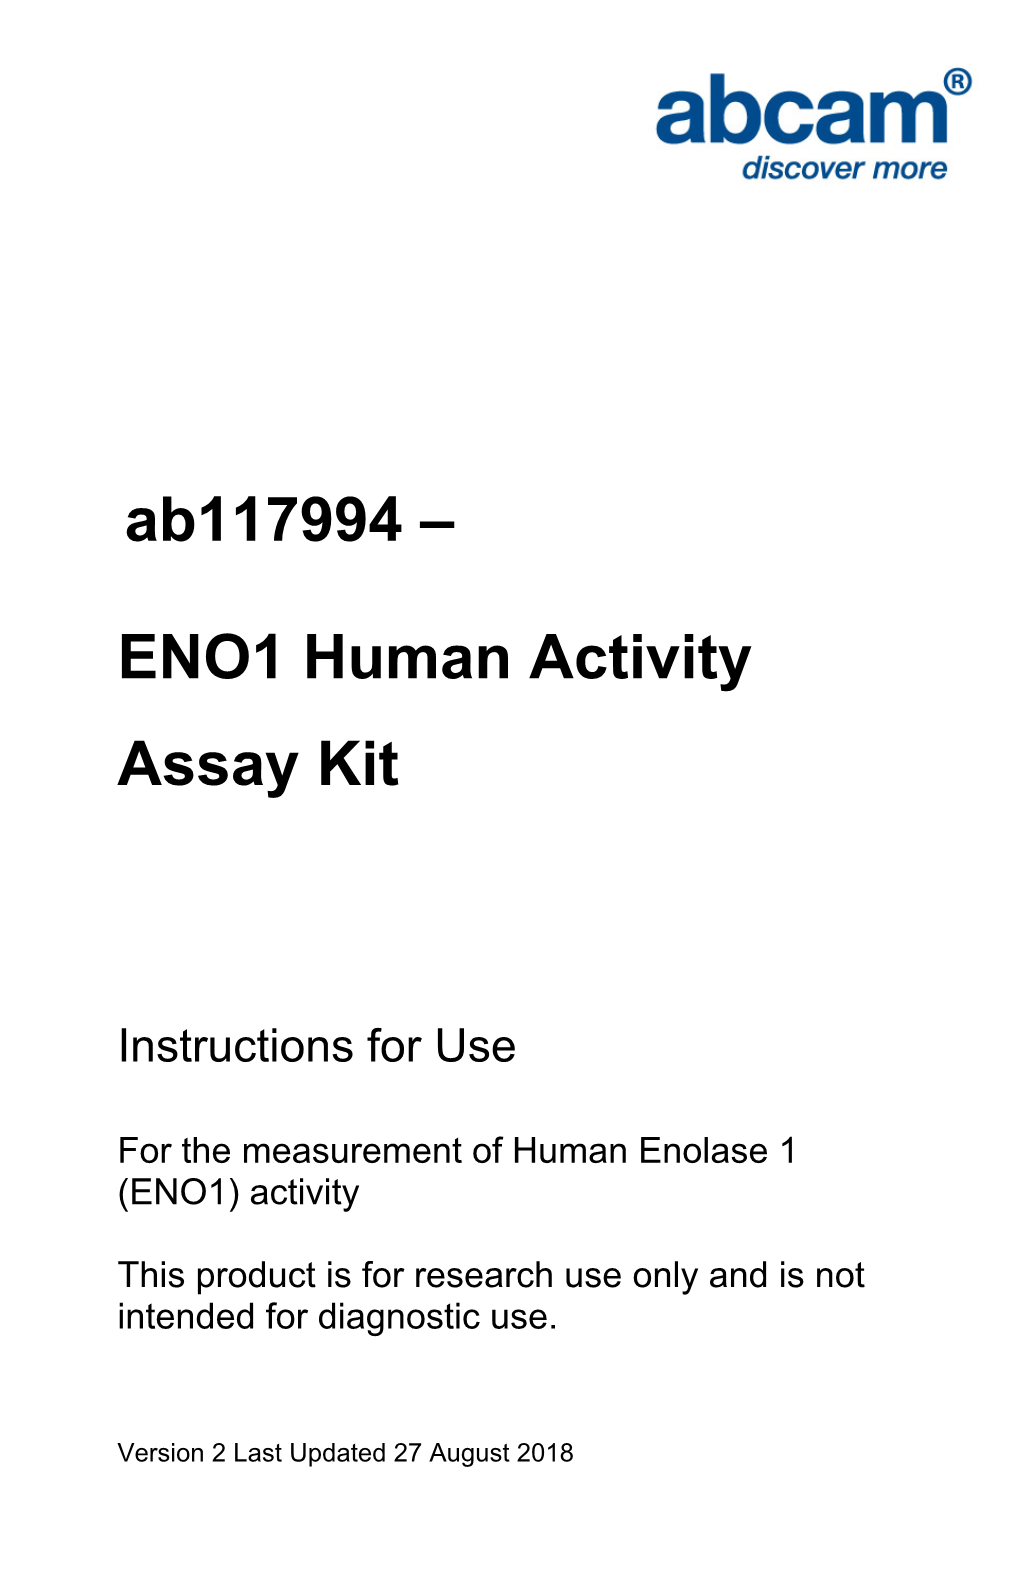 ENO1 Human Activity Assay Kit